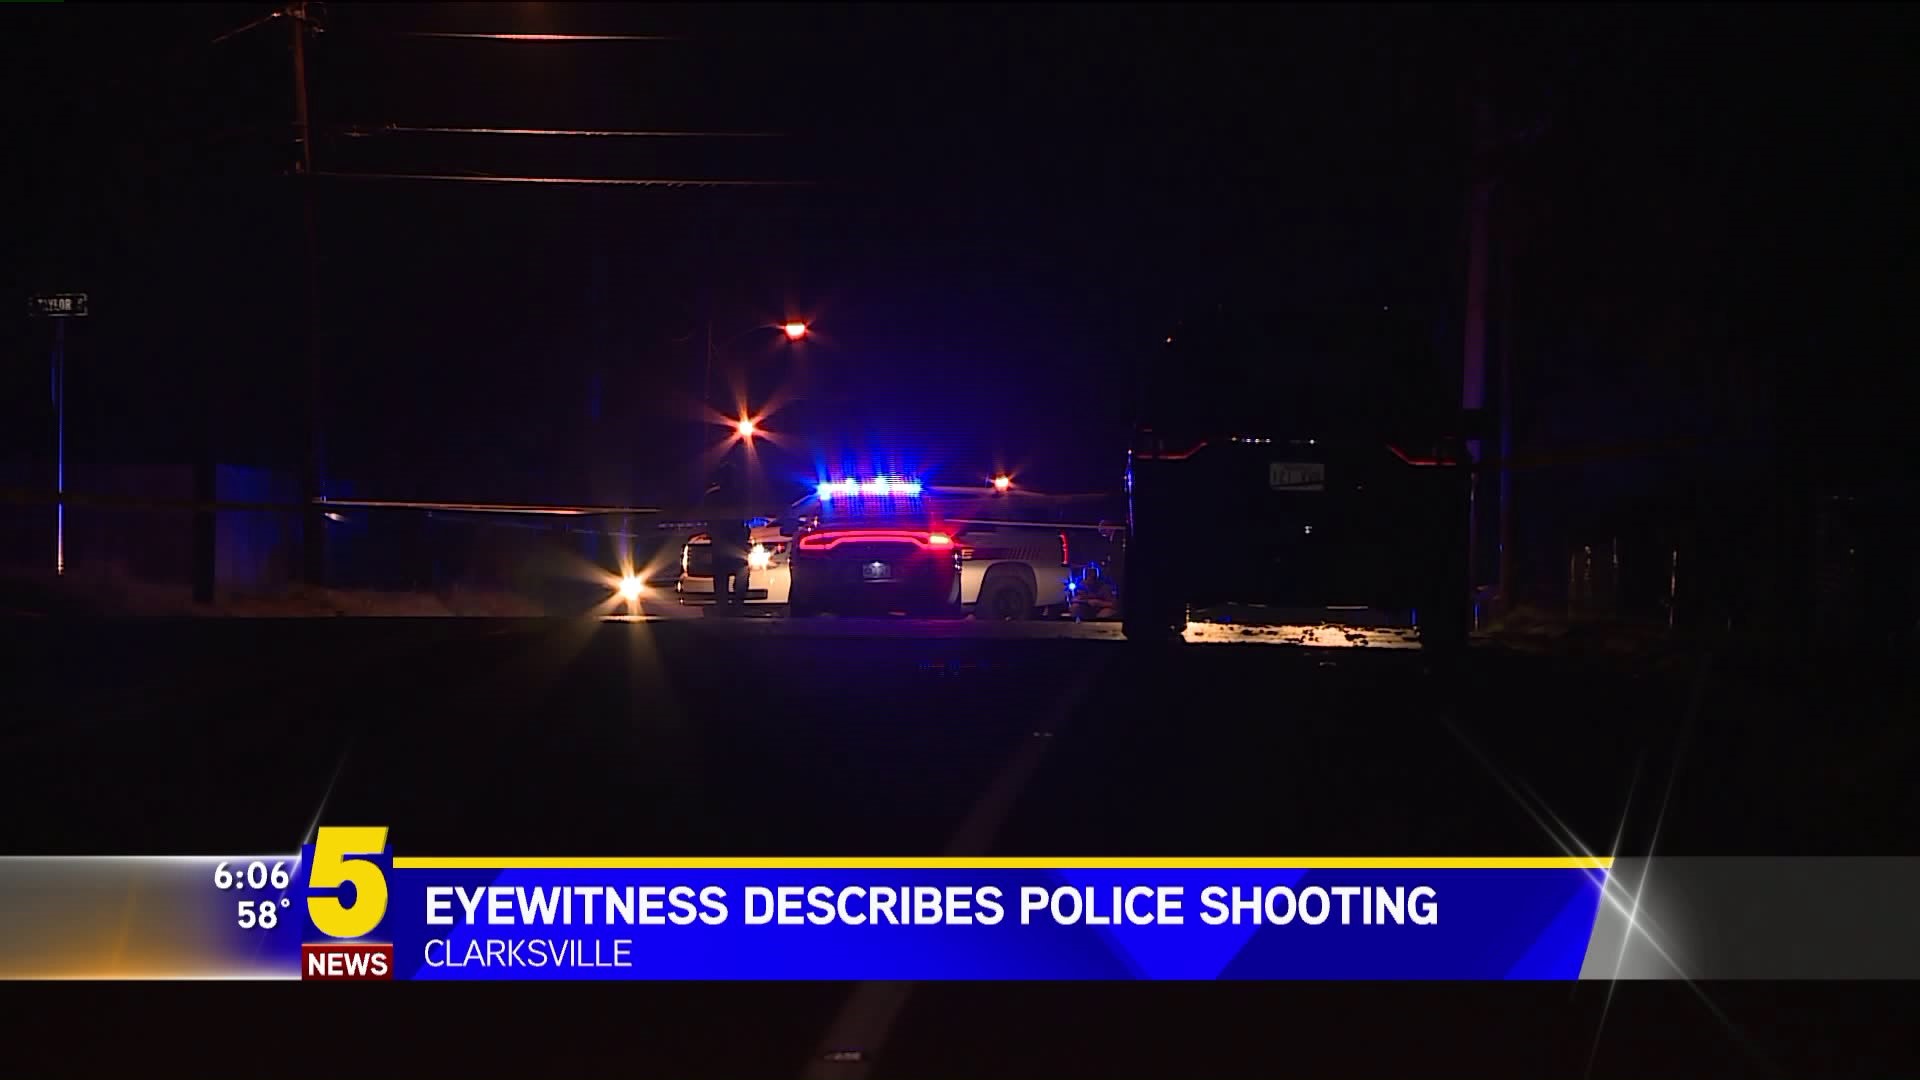 Eyewitness Describes Police Shooting